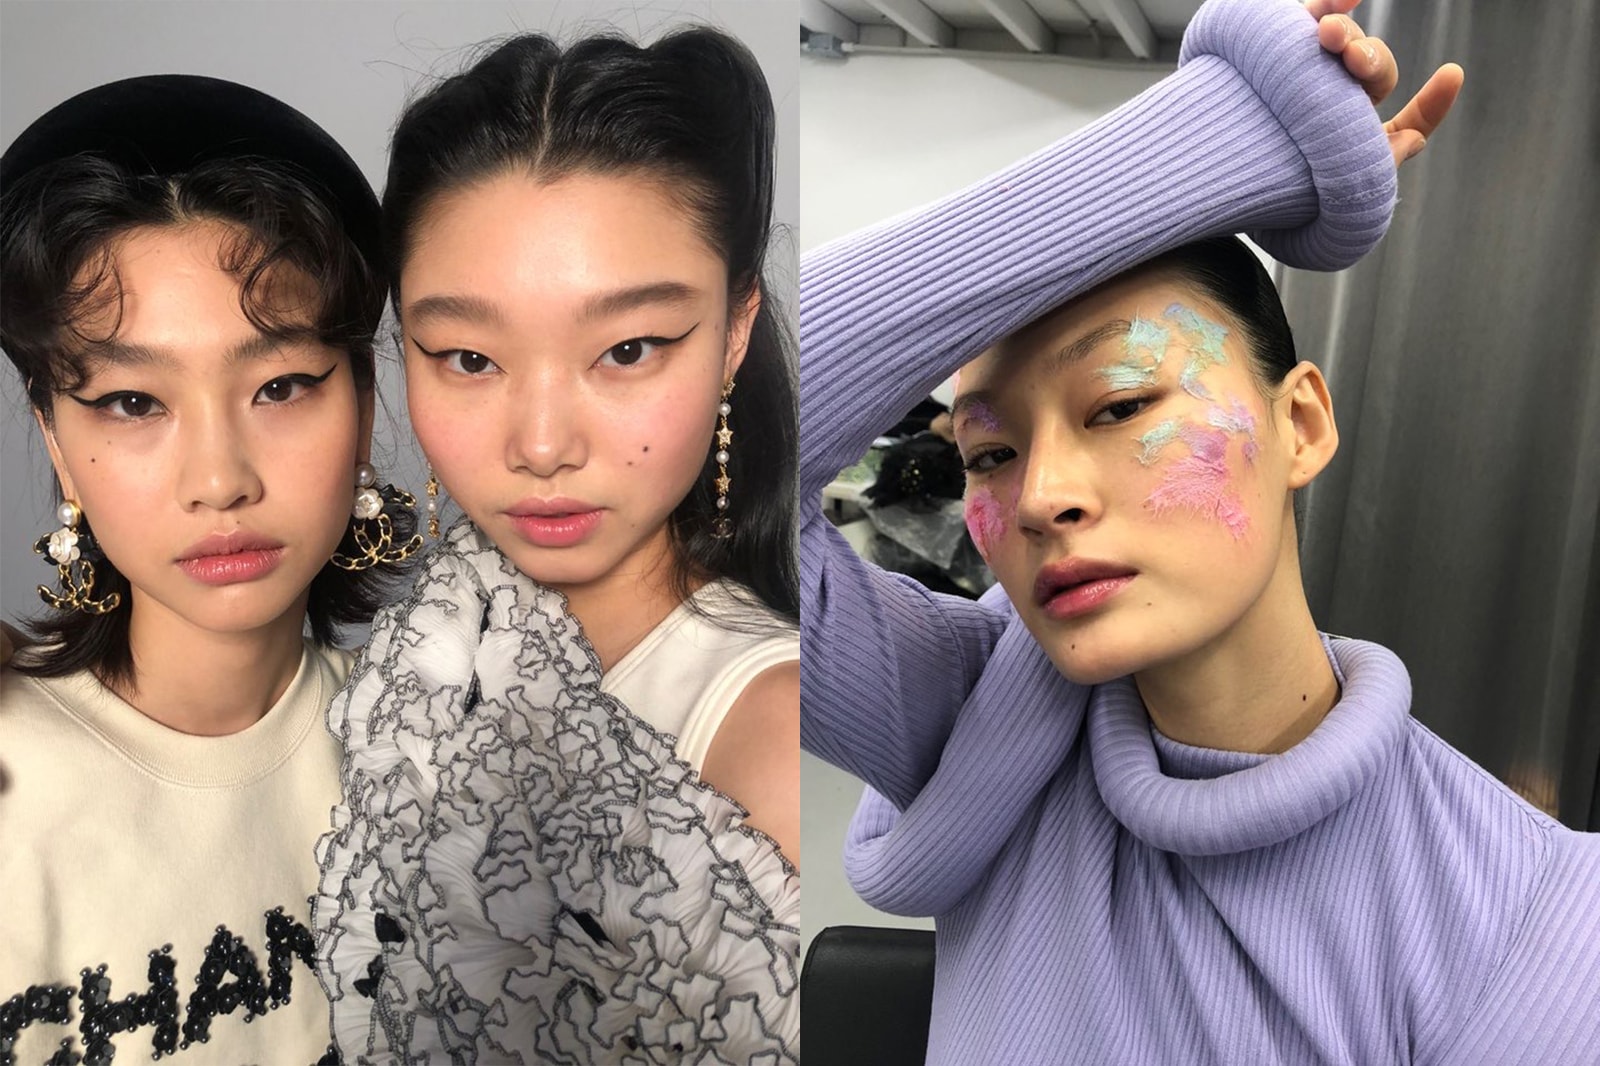 k-beauty makeup artist joynara won joyeon yoonyoung bae hoyeon jung beauty models fashion photoshoot